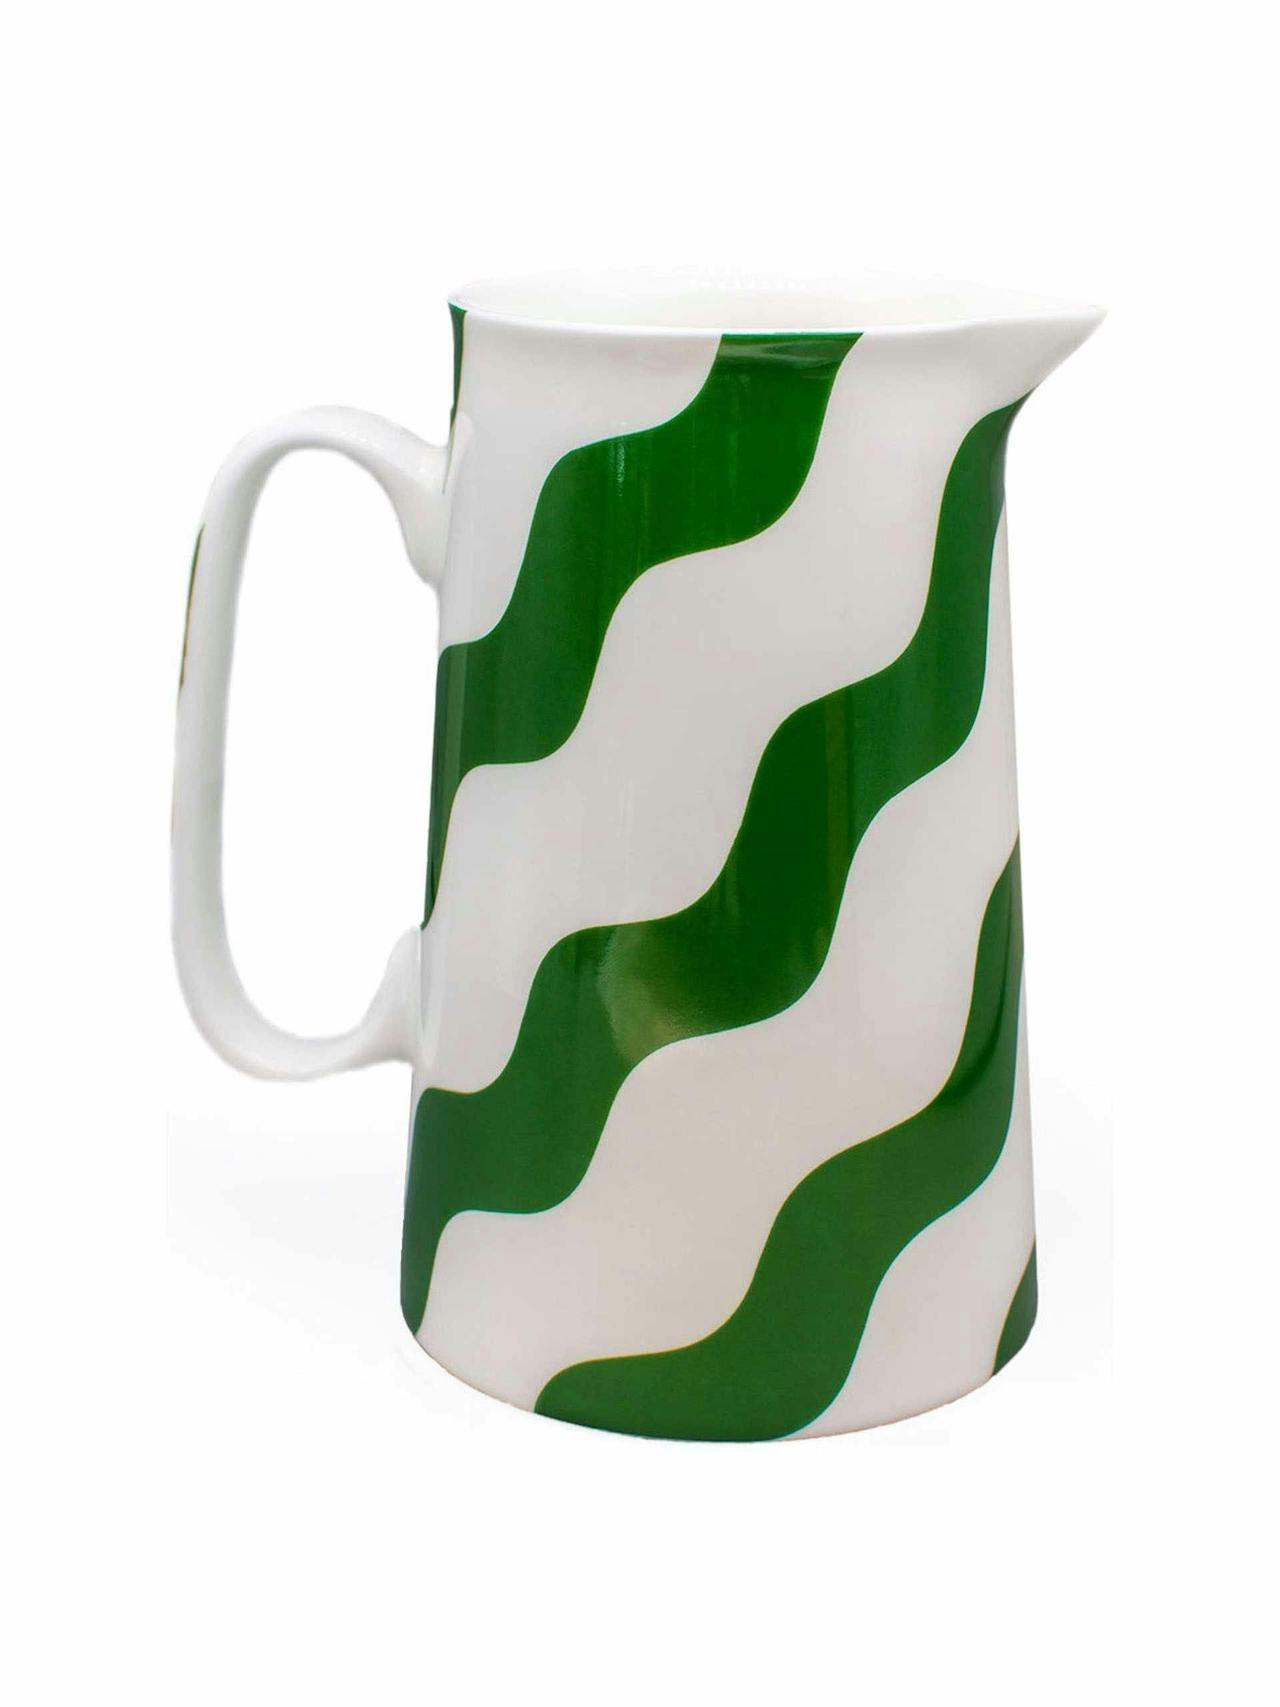 Green pitcher jug